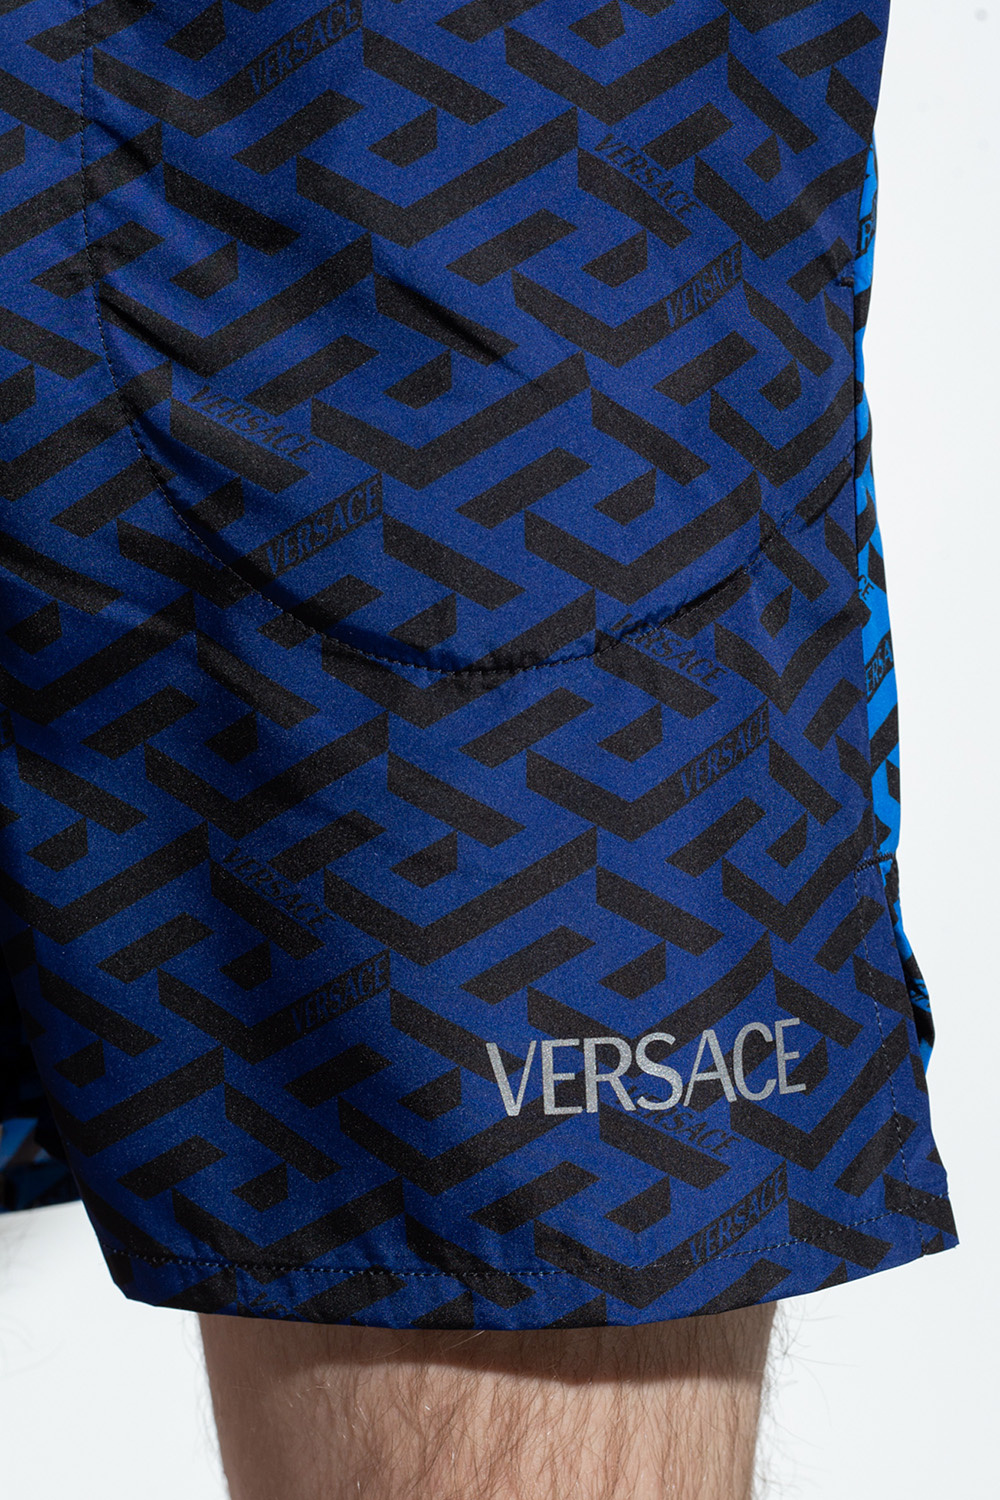 Versace Nike Pro Flex Shorts Mens